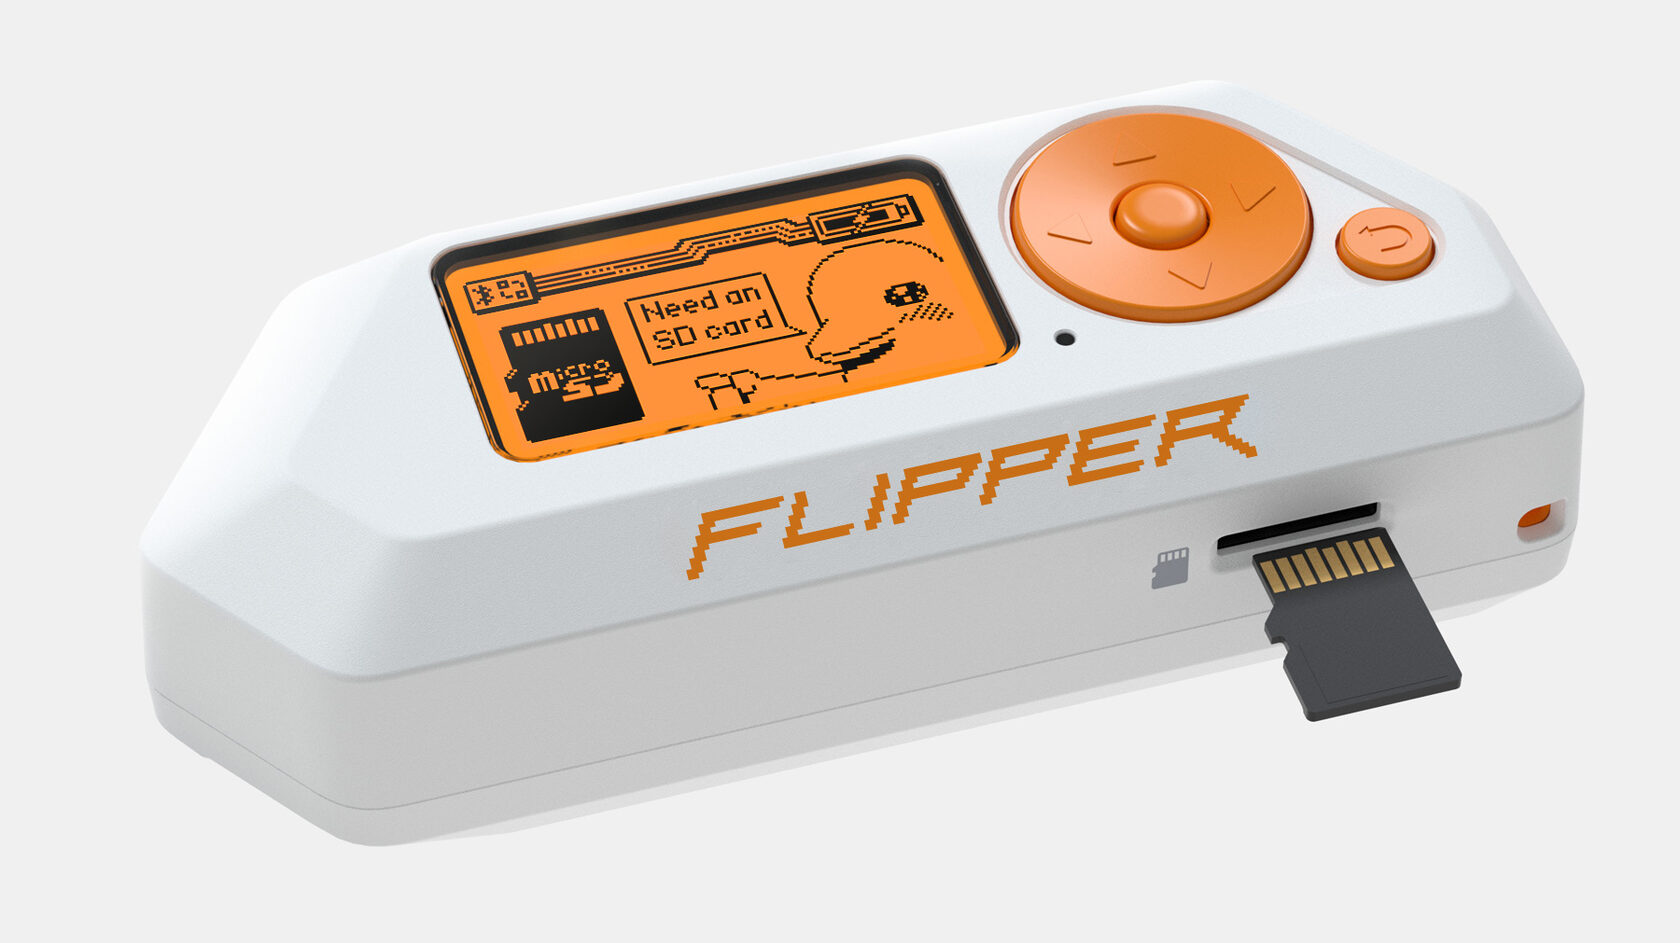 Flipper Zero bad usb attack toolkit